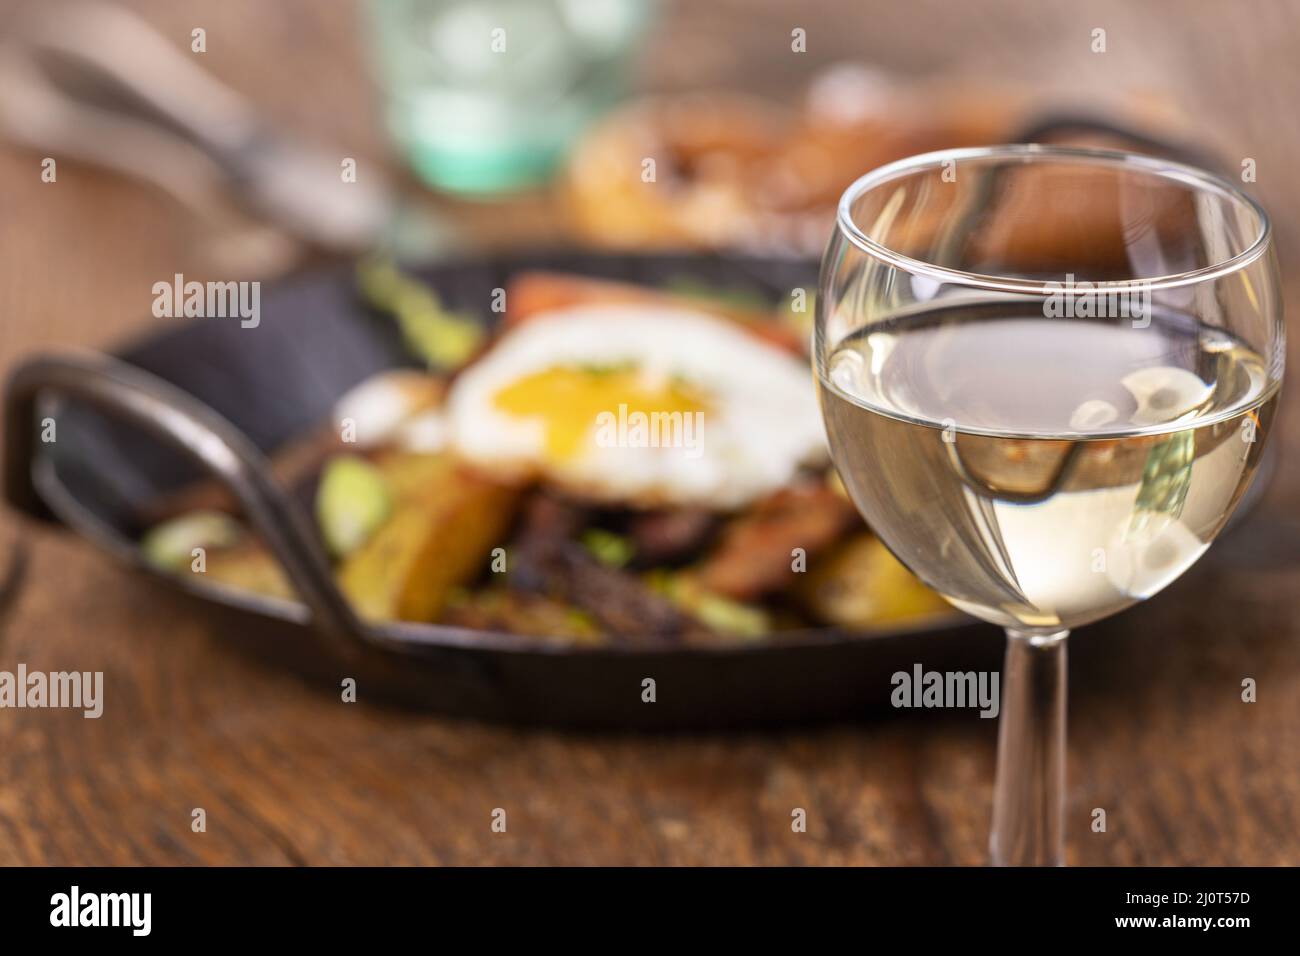 Wine and Tyrolean potato grÃ¶stlin the pan Stock Photo